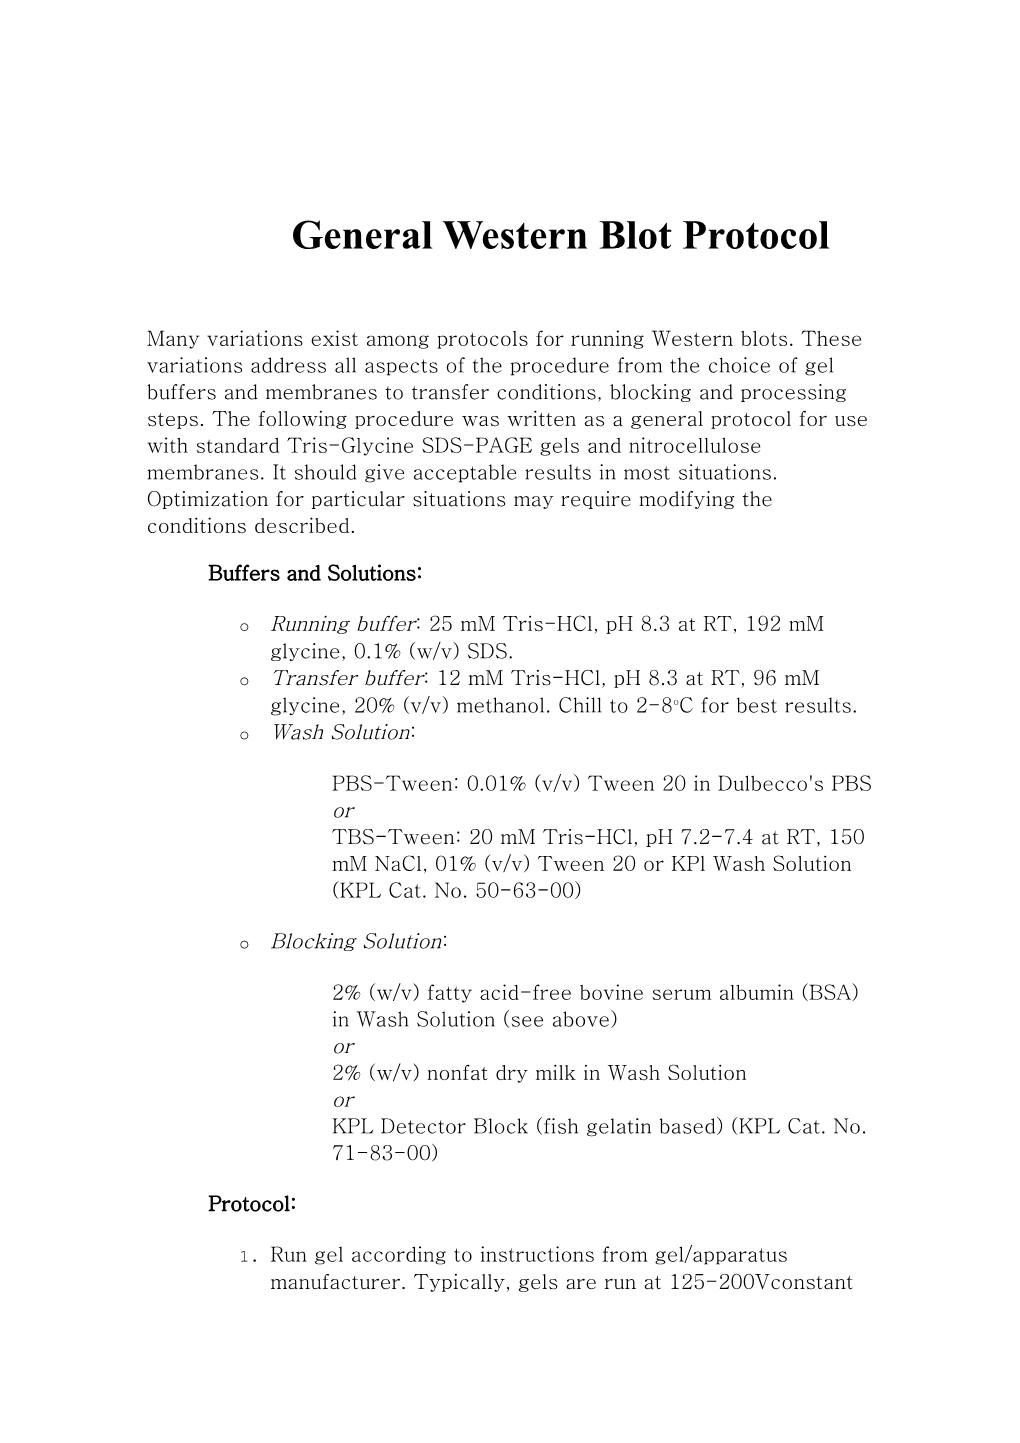 Western Blot (General)